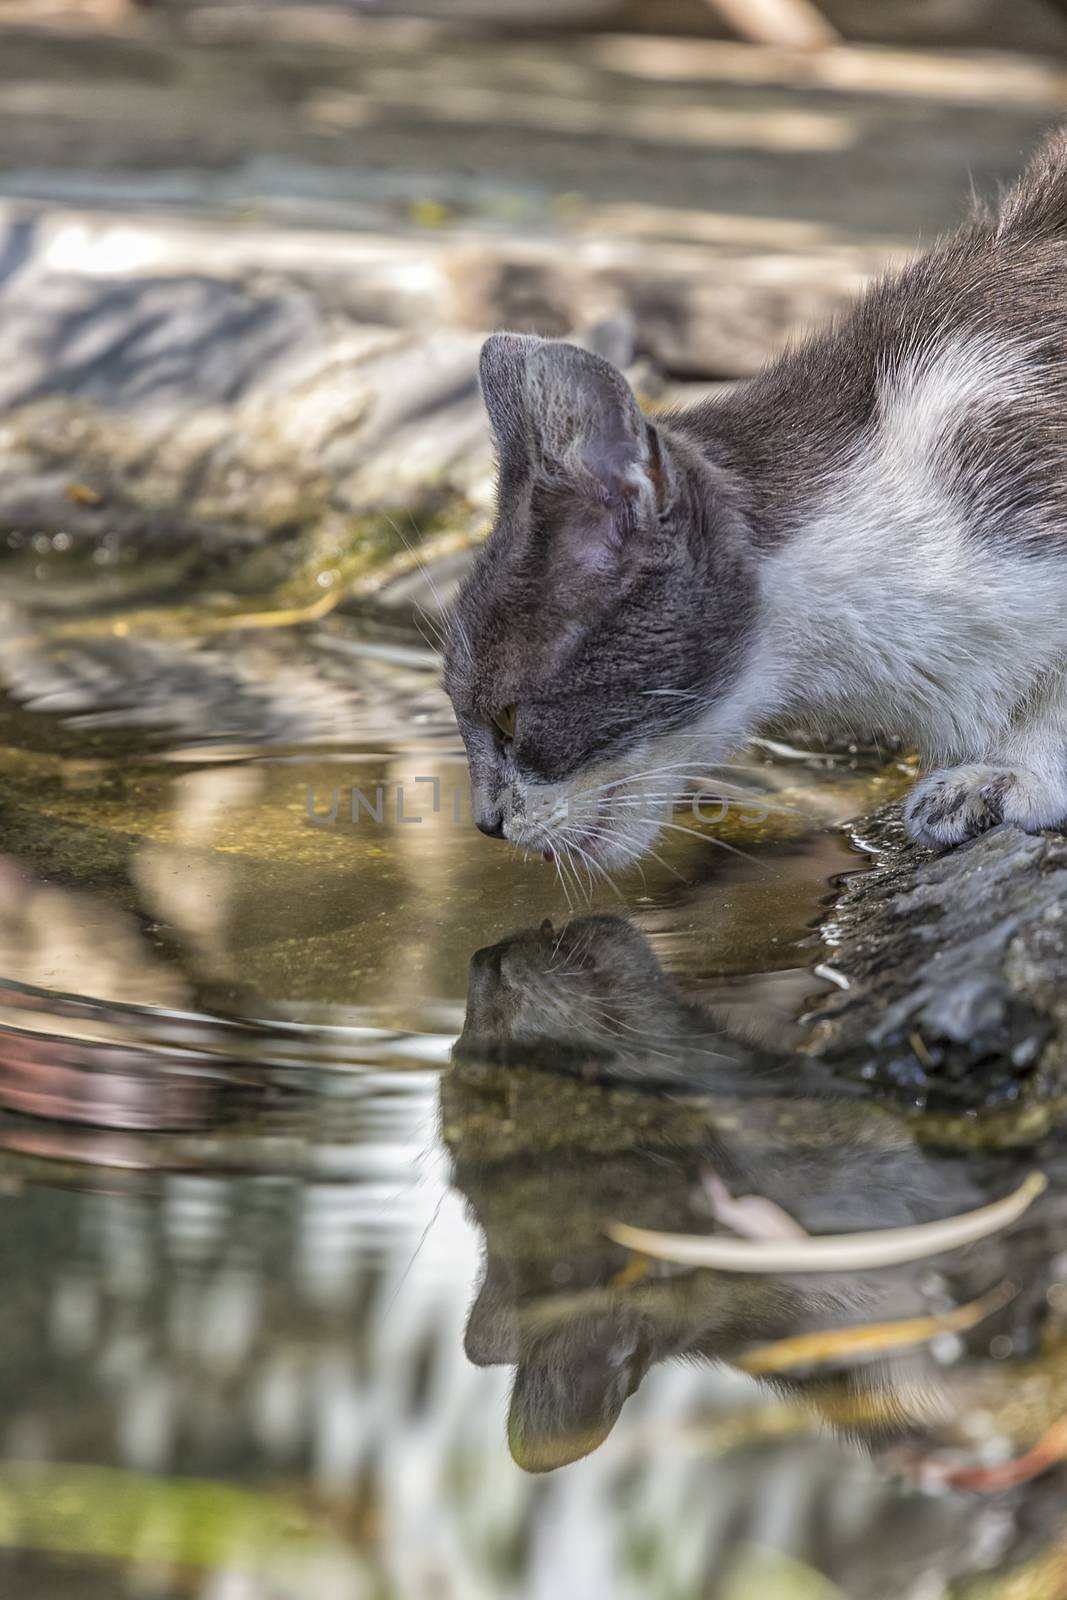 Cute cat drinks water. Close